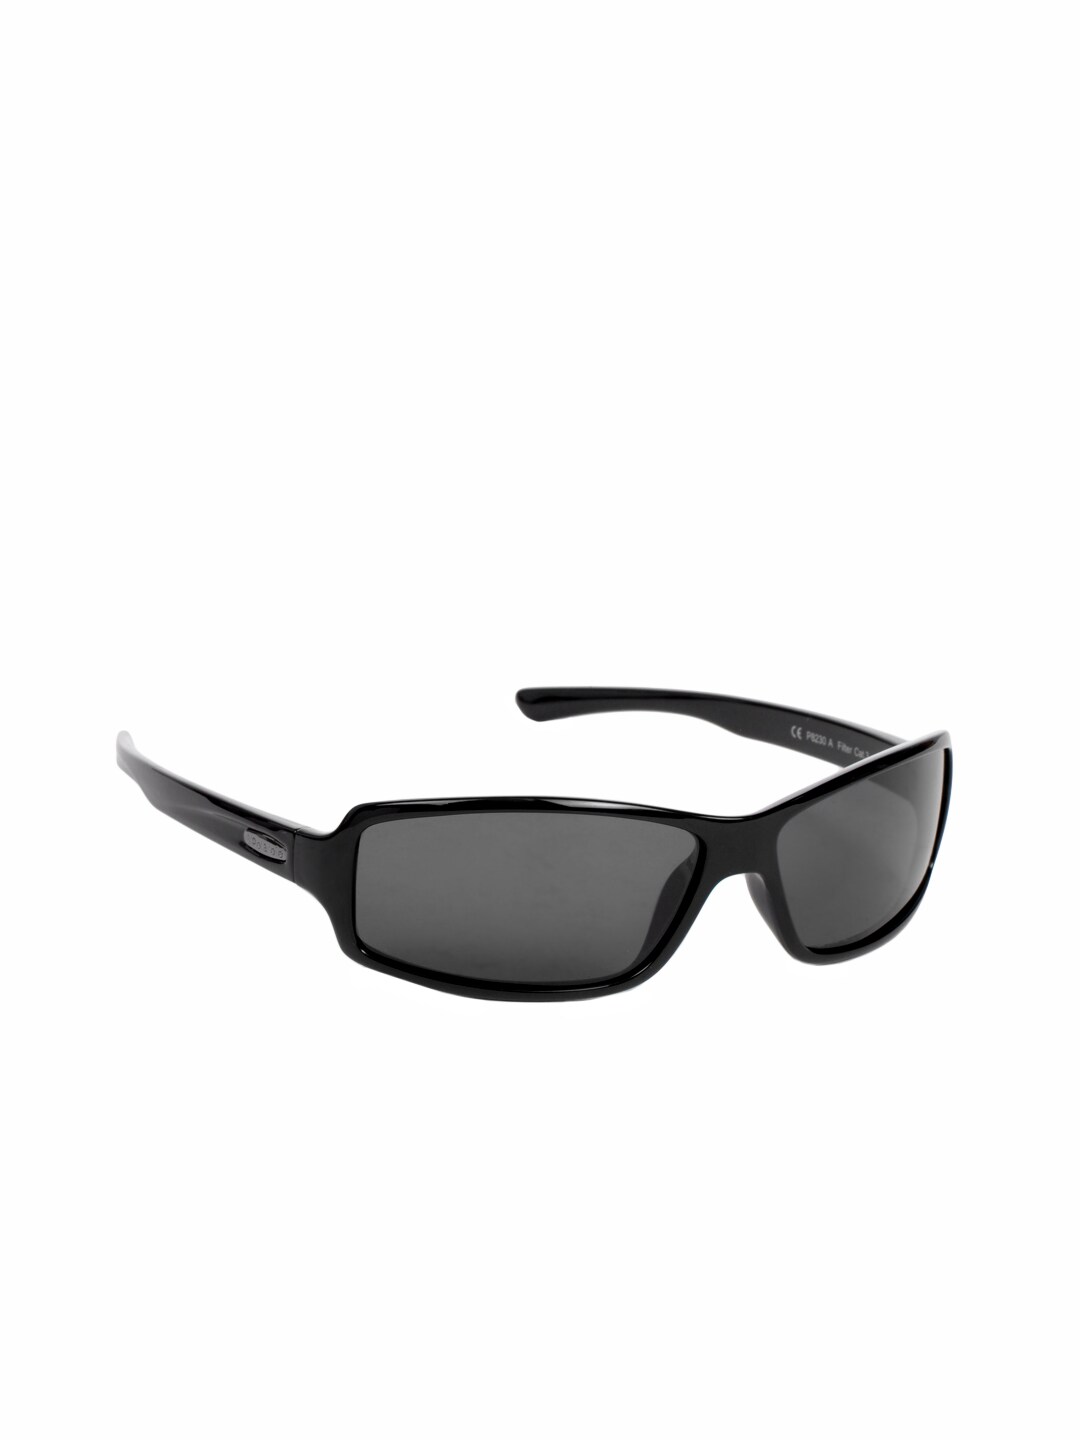 Polaroid Unisex Black Sunglasses